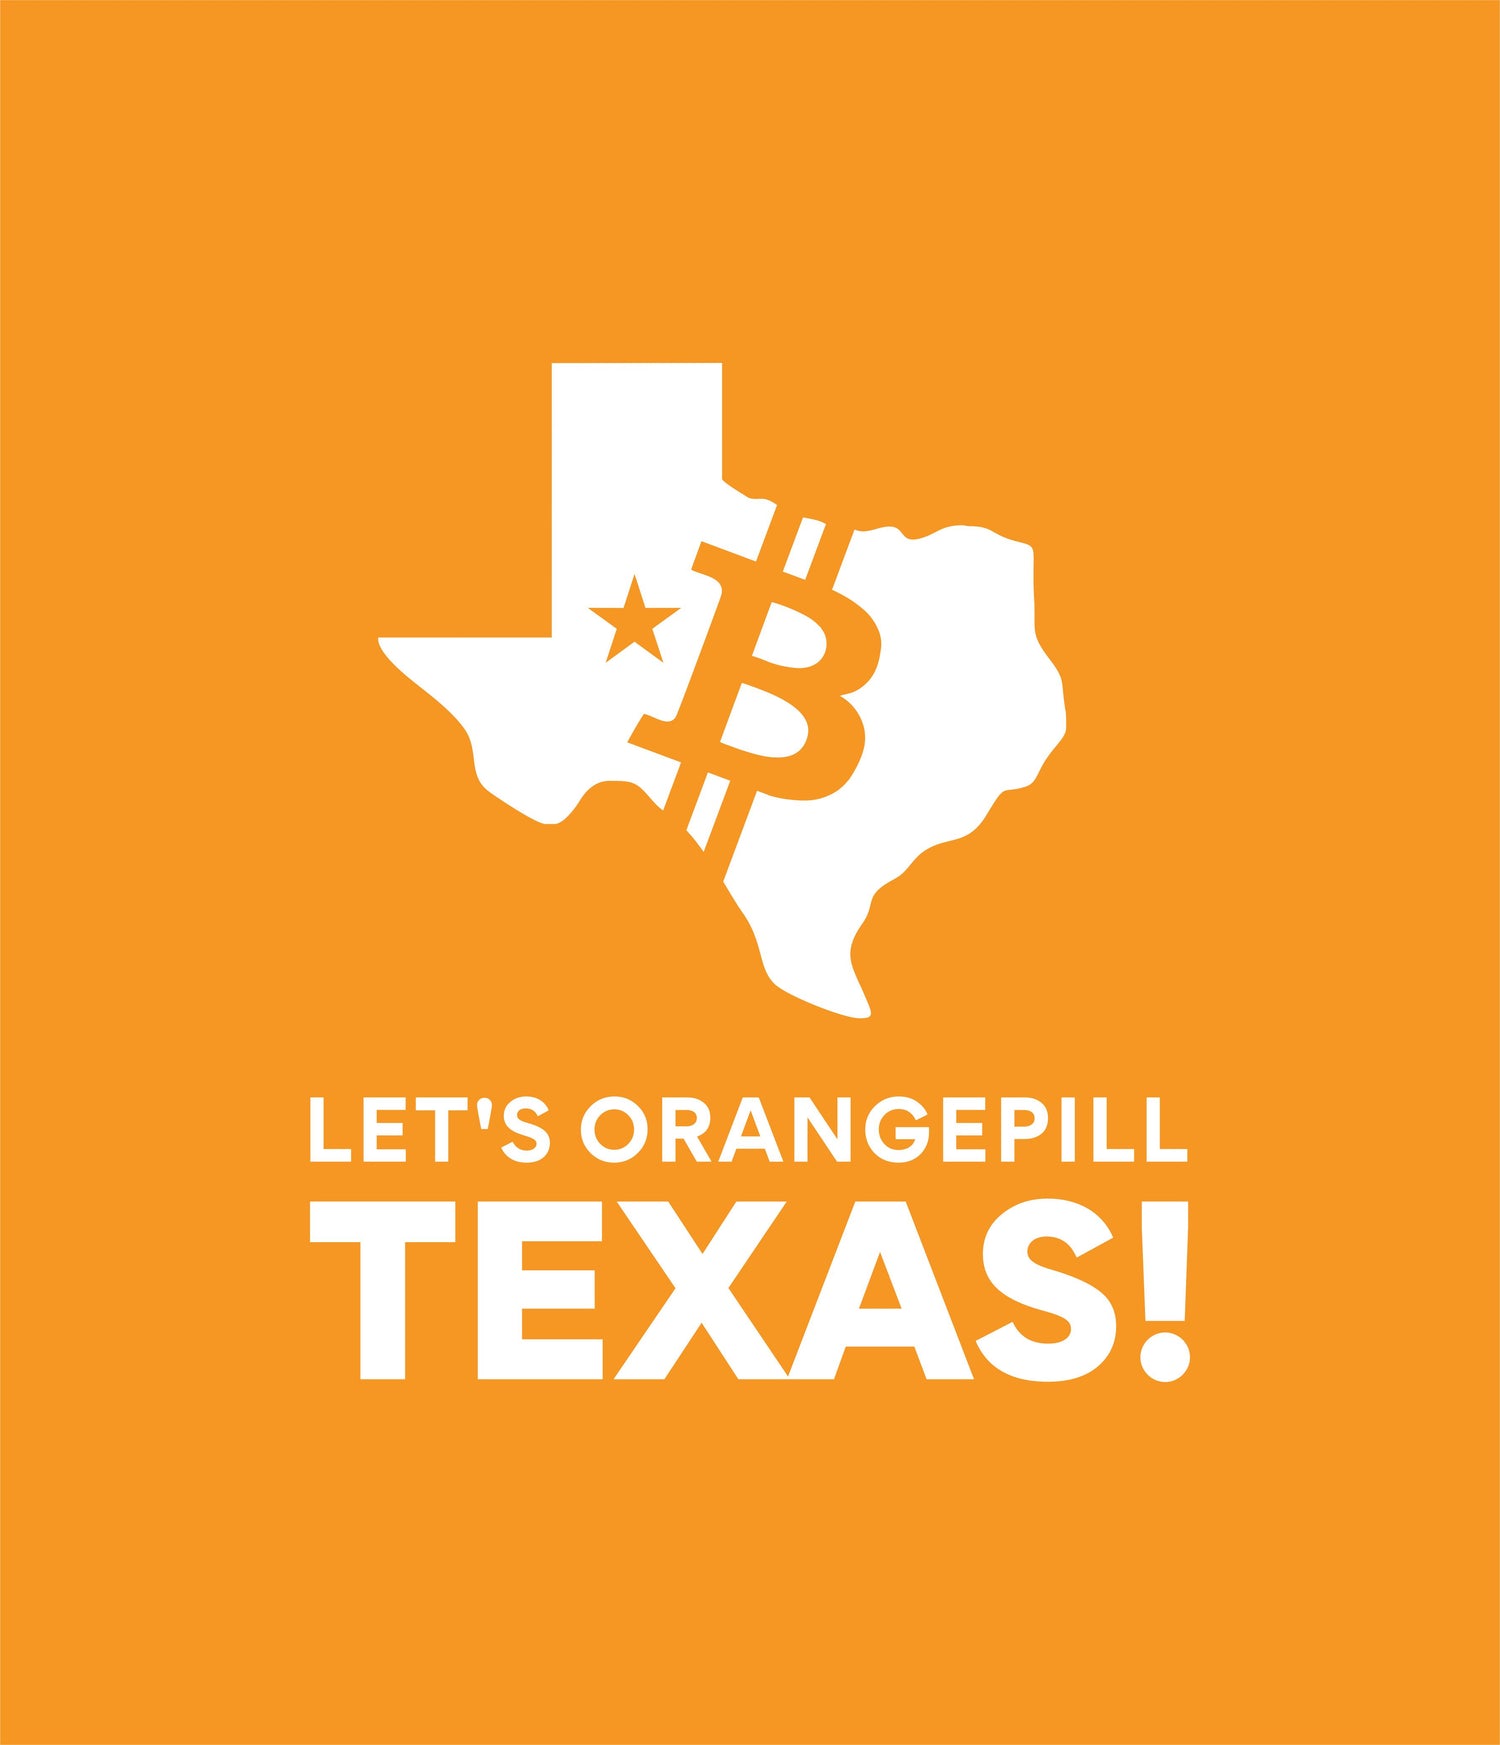 Let's Orangepill Texas at the Texas Bitcoin Project